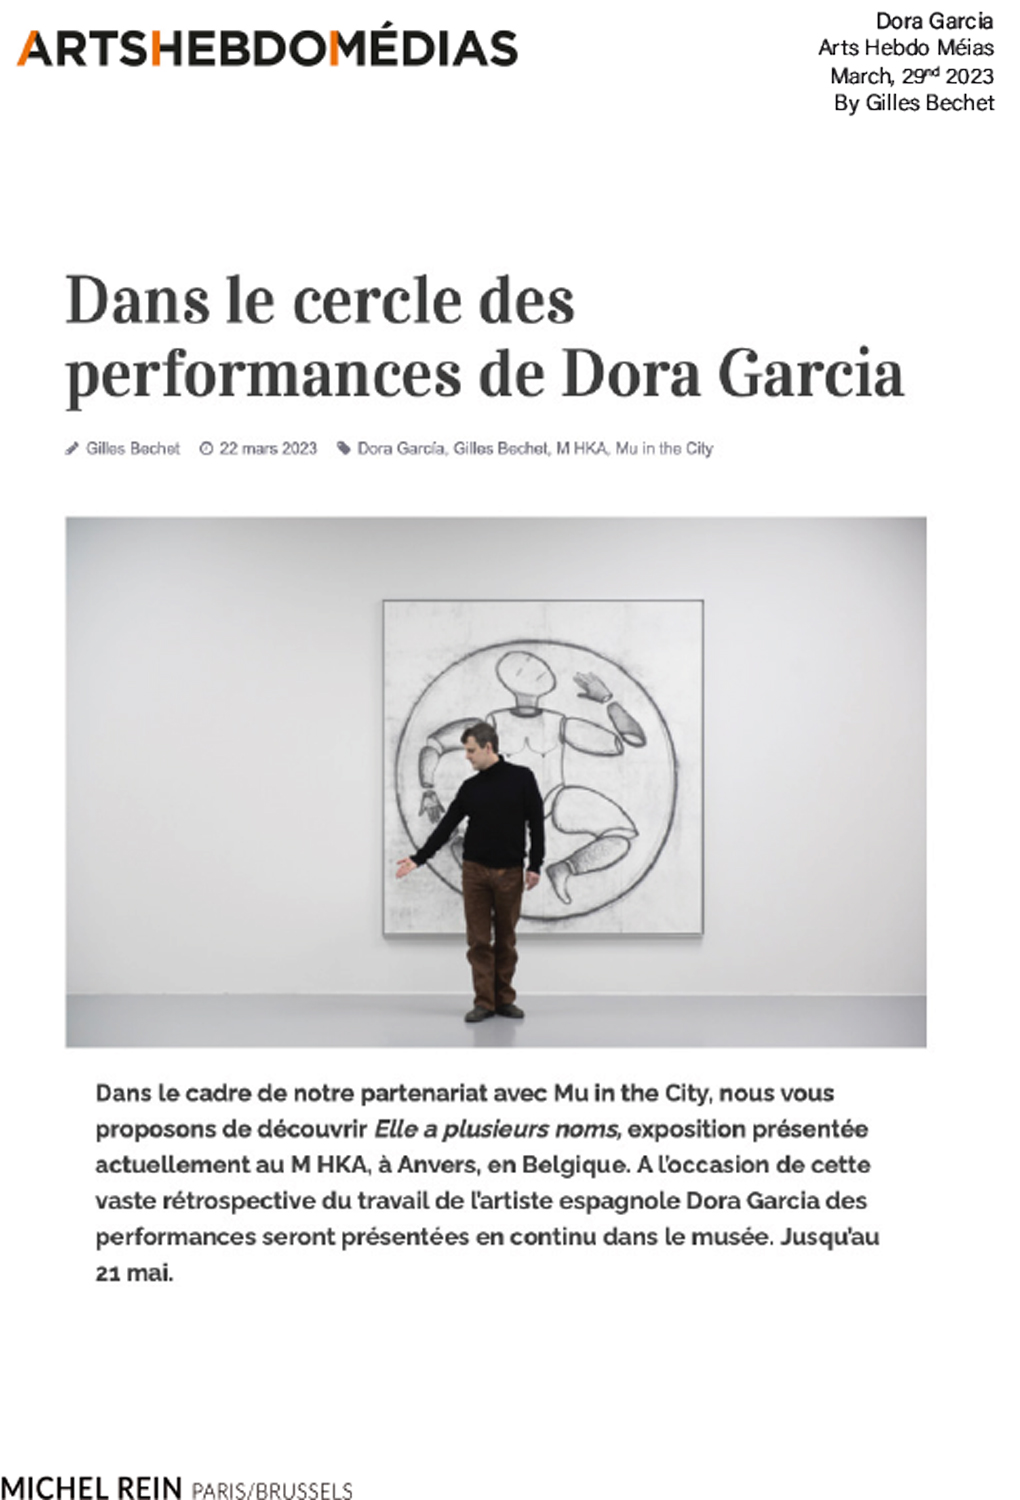 Dans le cercle des performances de Dora Garcia - Arts Hebdo Médias